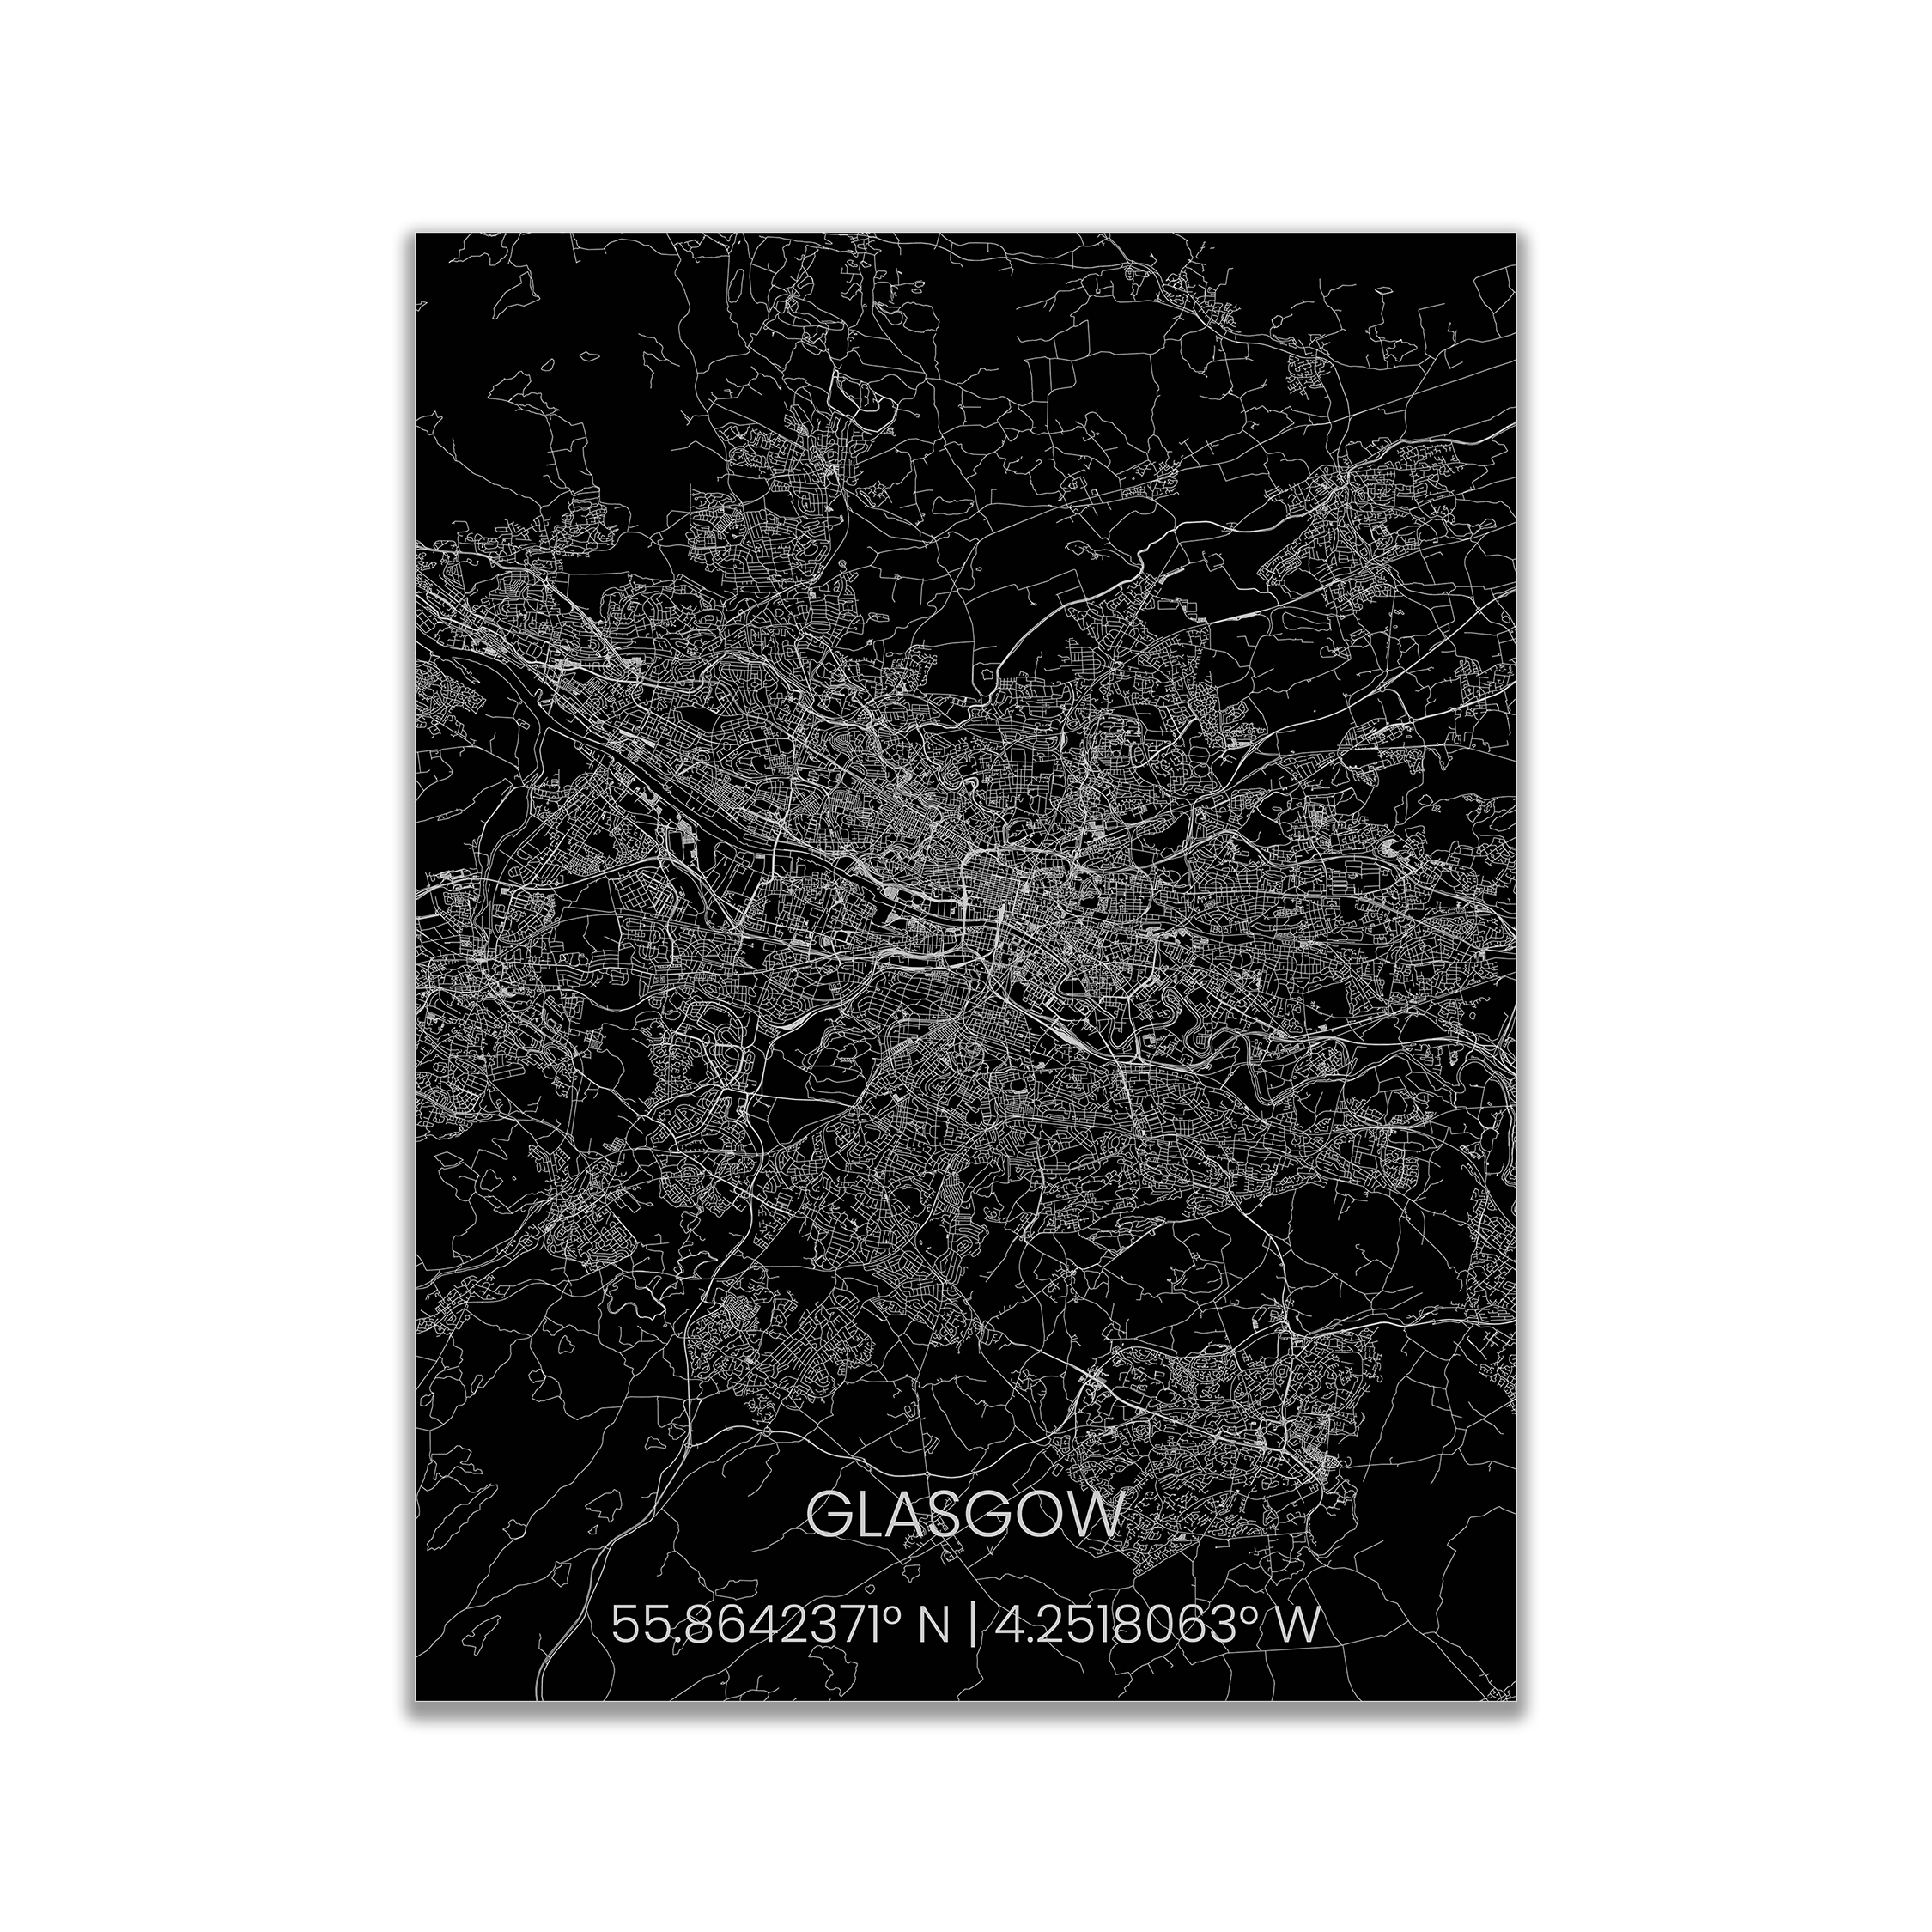 Glasgow - Brandthout